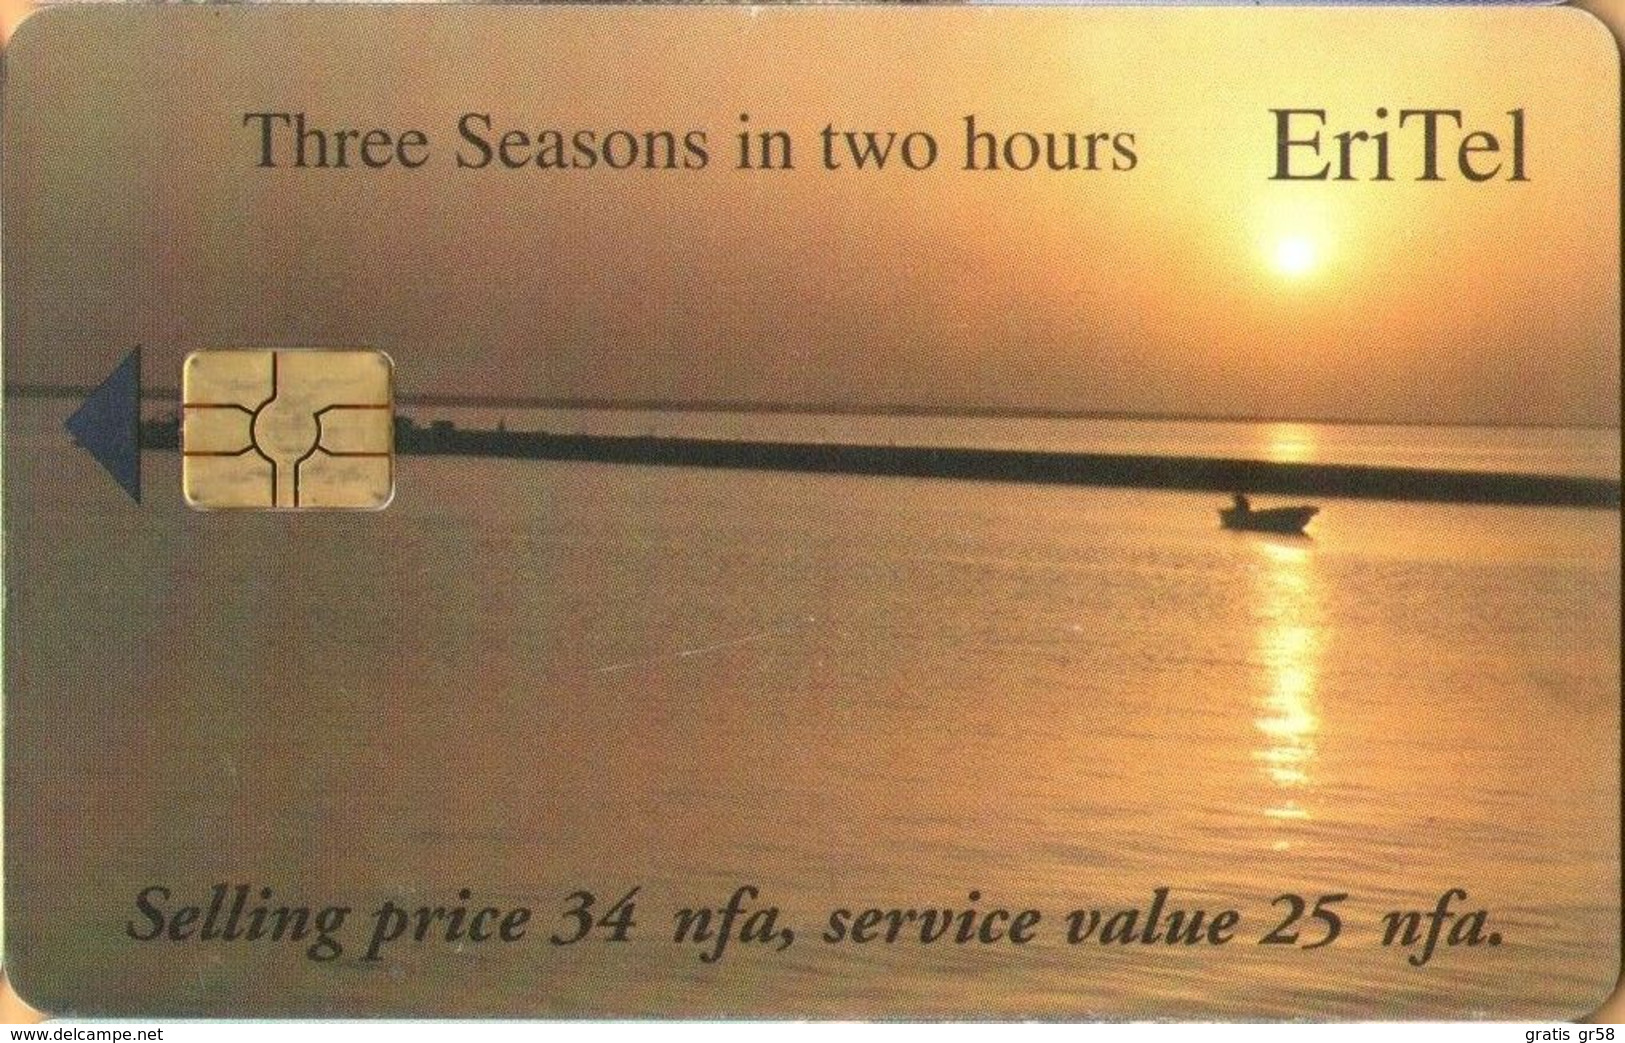 Erithrea - Eritel, ER-ERI-0011, Three Seasons In Two Hours - The Lake (New Logo), 25 Nfk, Used - Eritrea